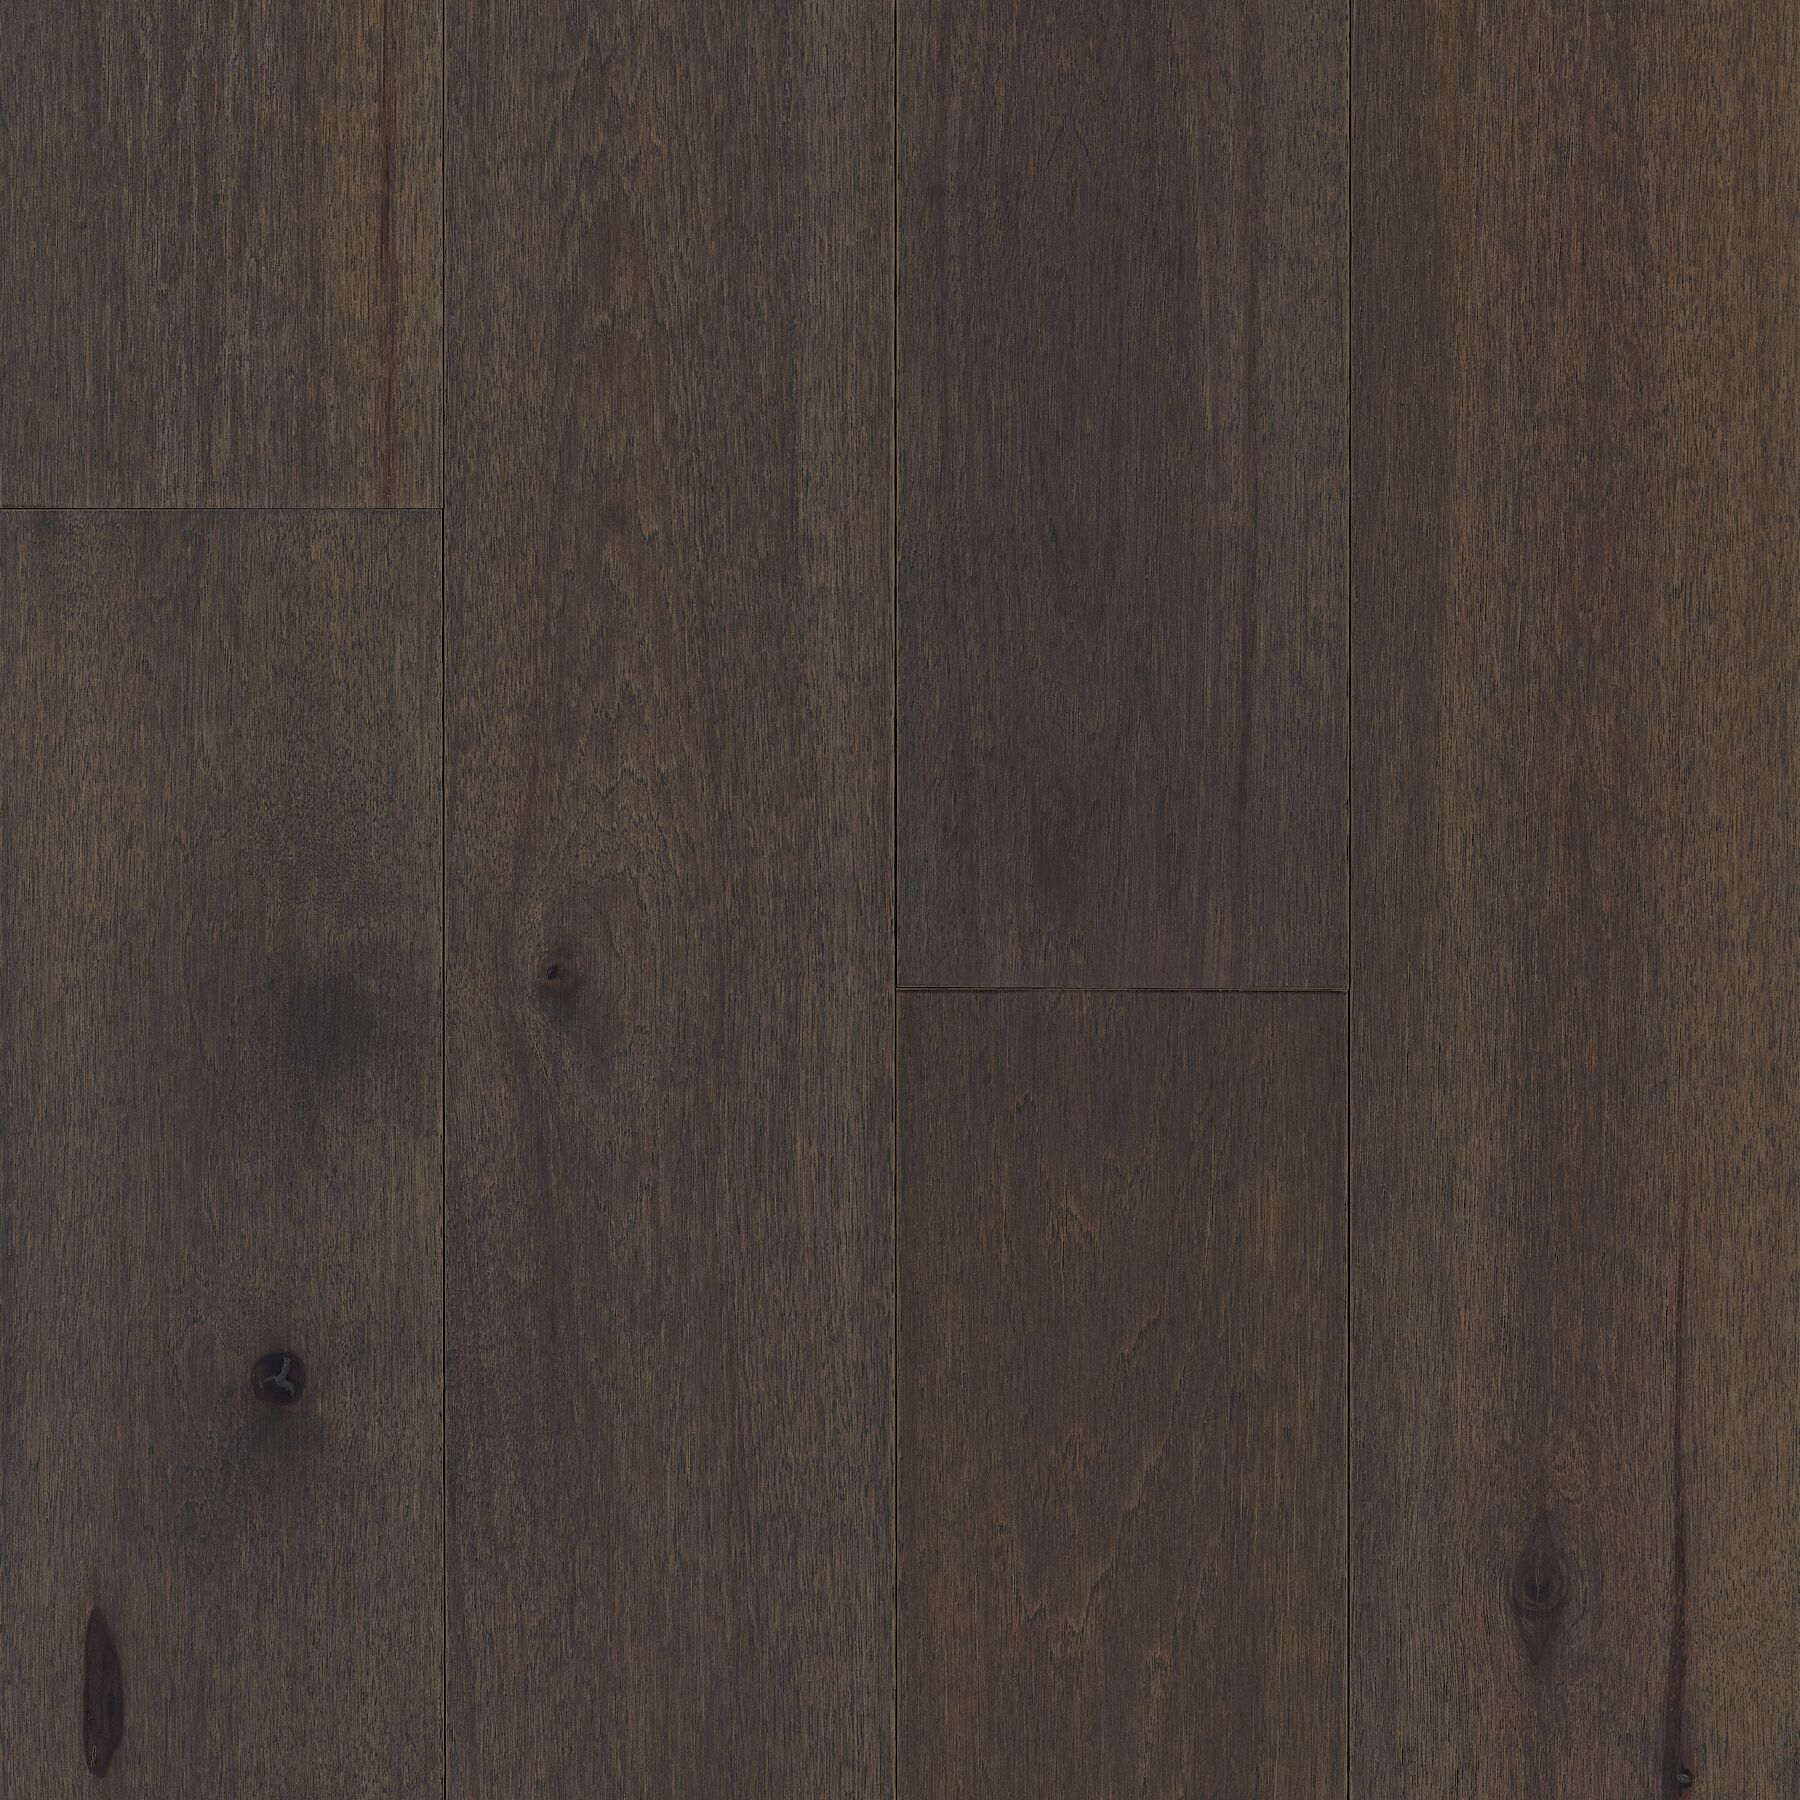 Bernese Dogwood Hardwood Flooring